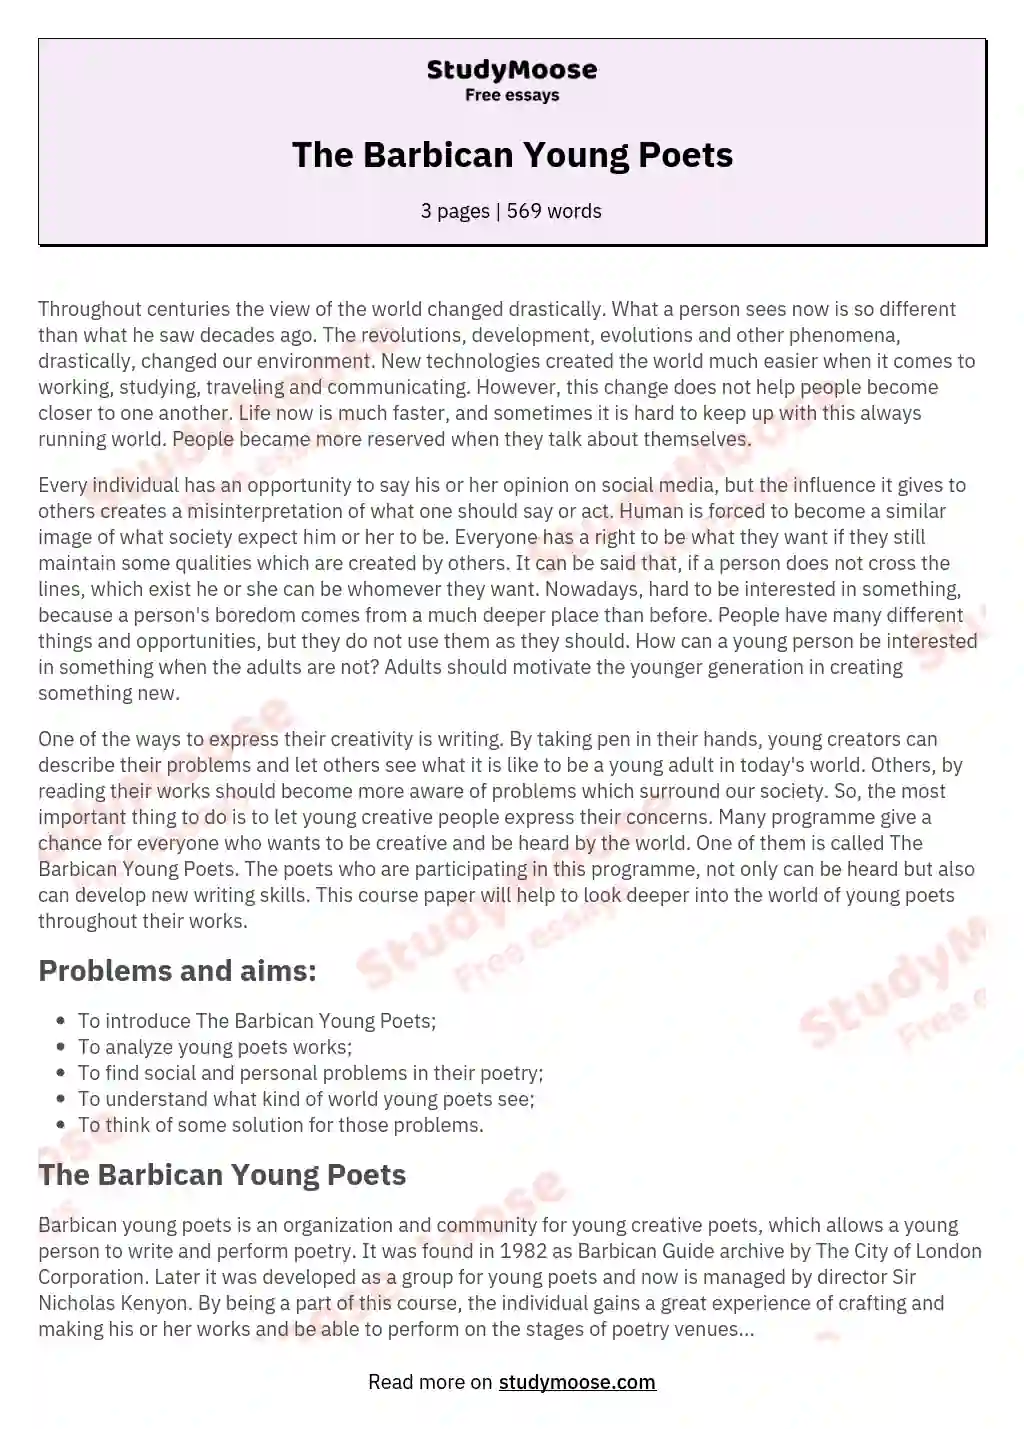 The Barbican Young Poets essay